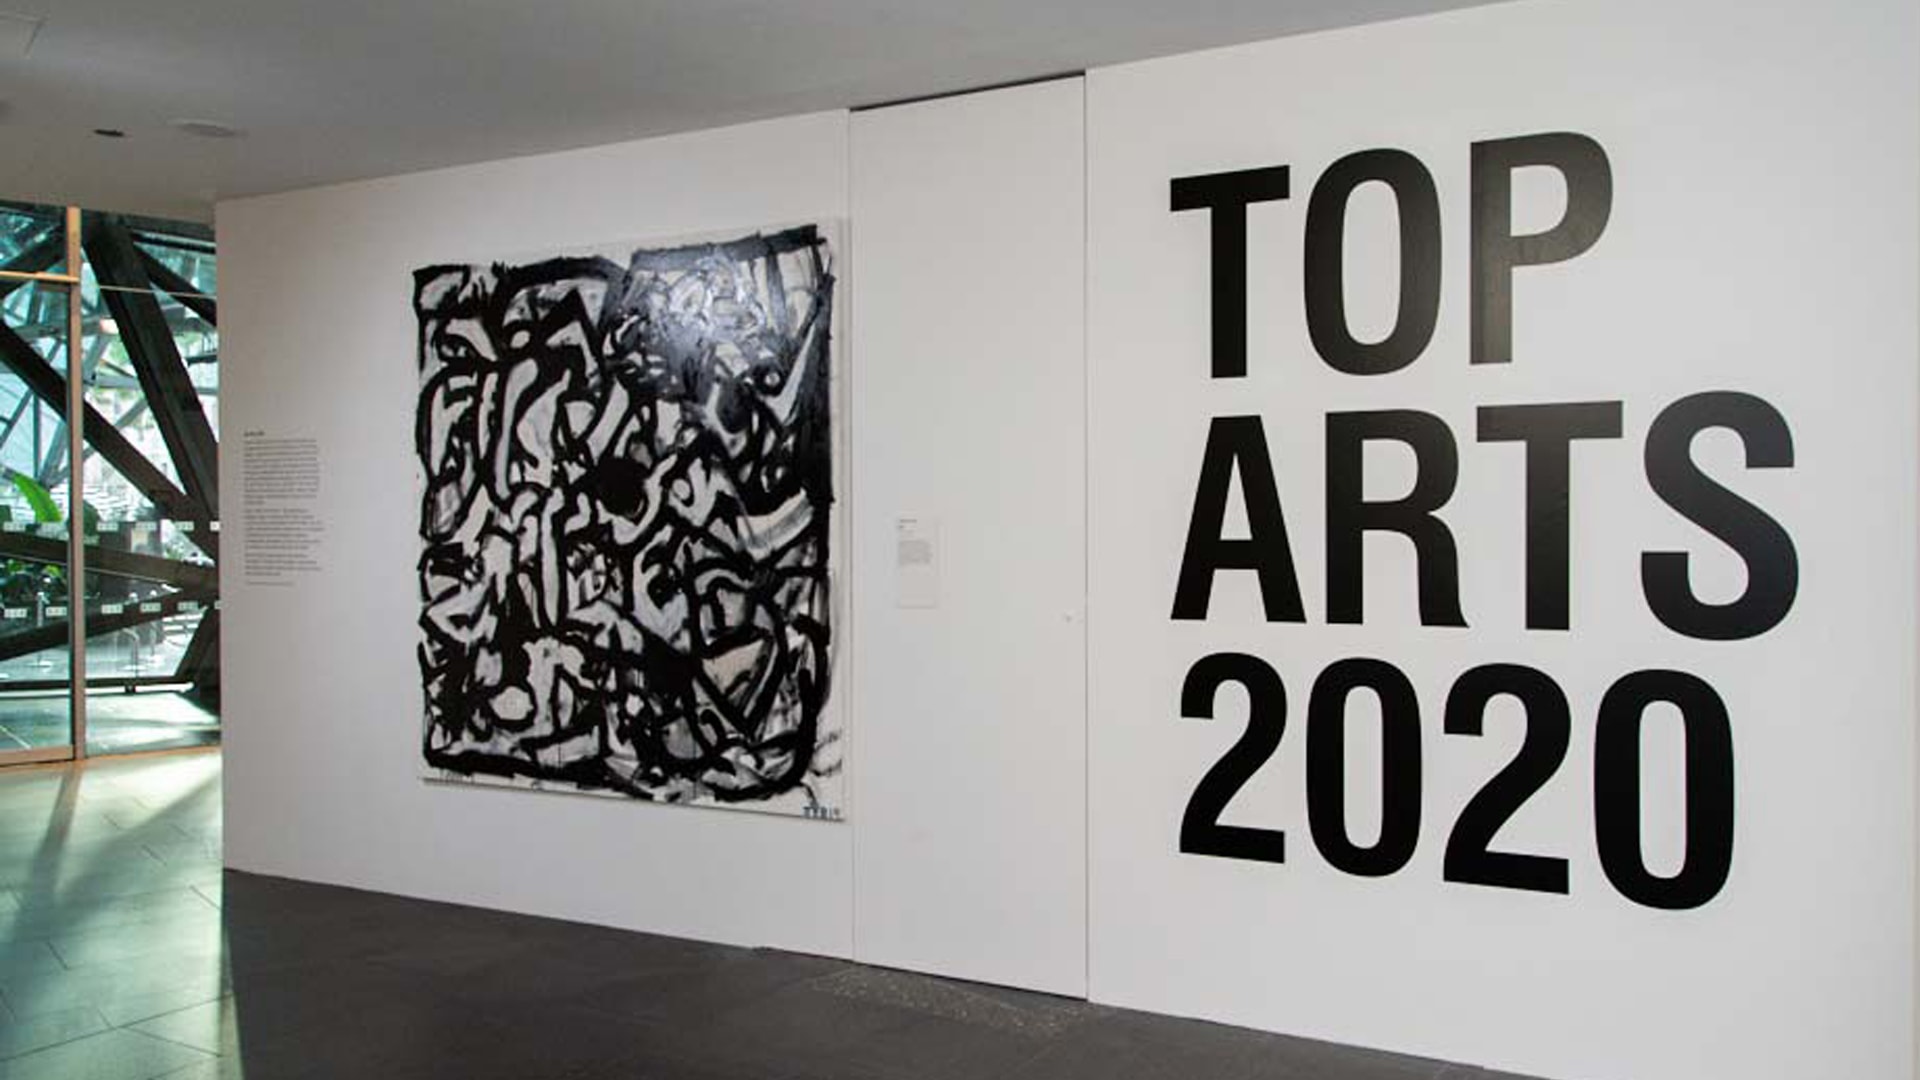 Top Arts 2020 entrance